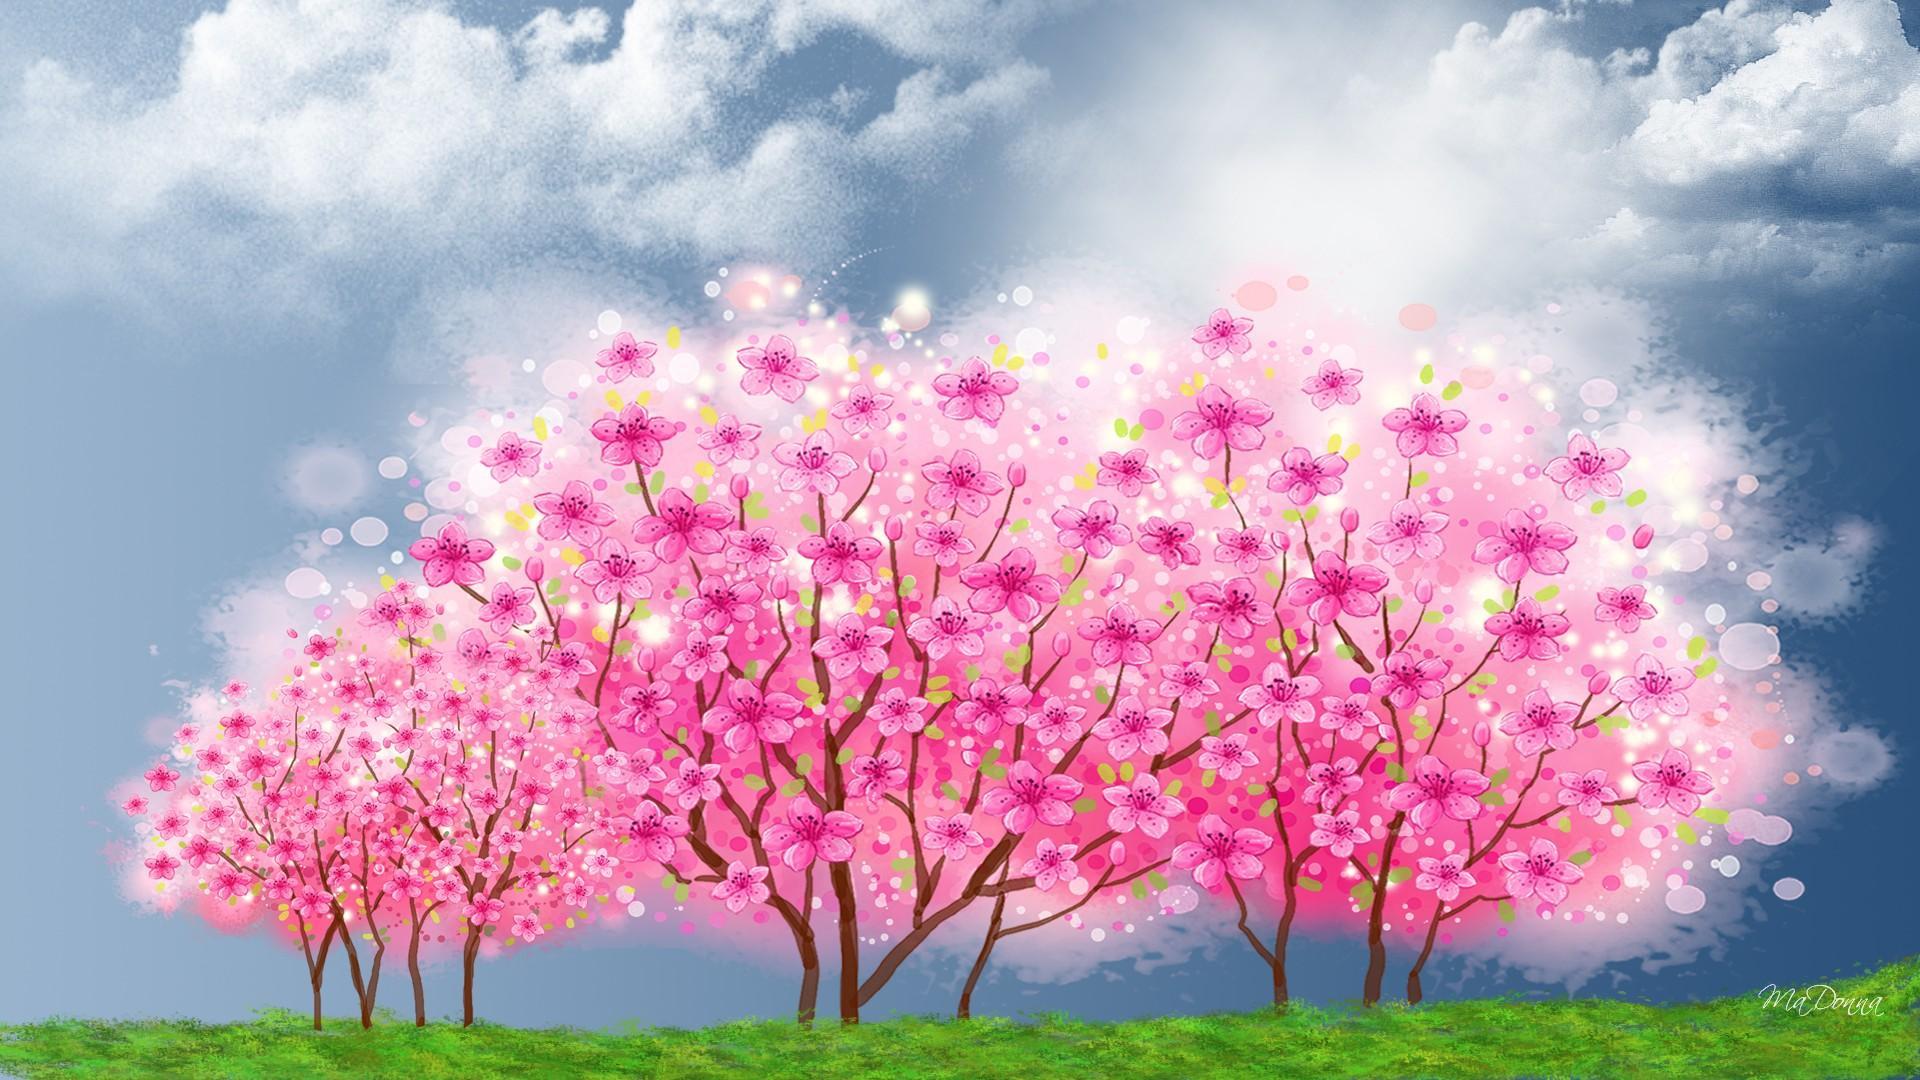 tapete musim semi,himmel,rosa,baum,natur,blume